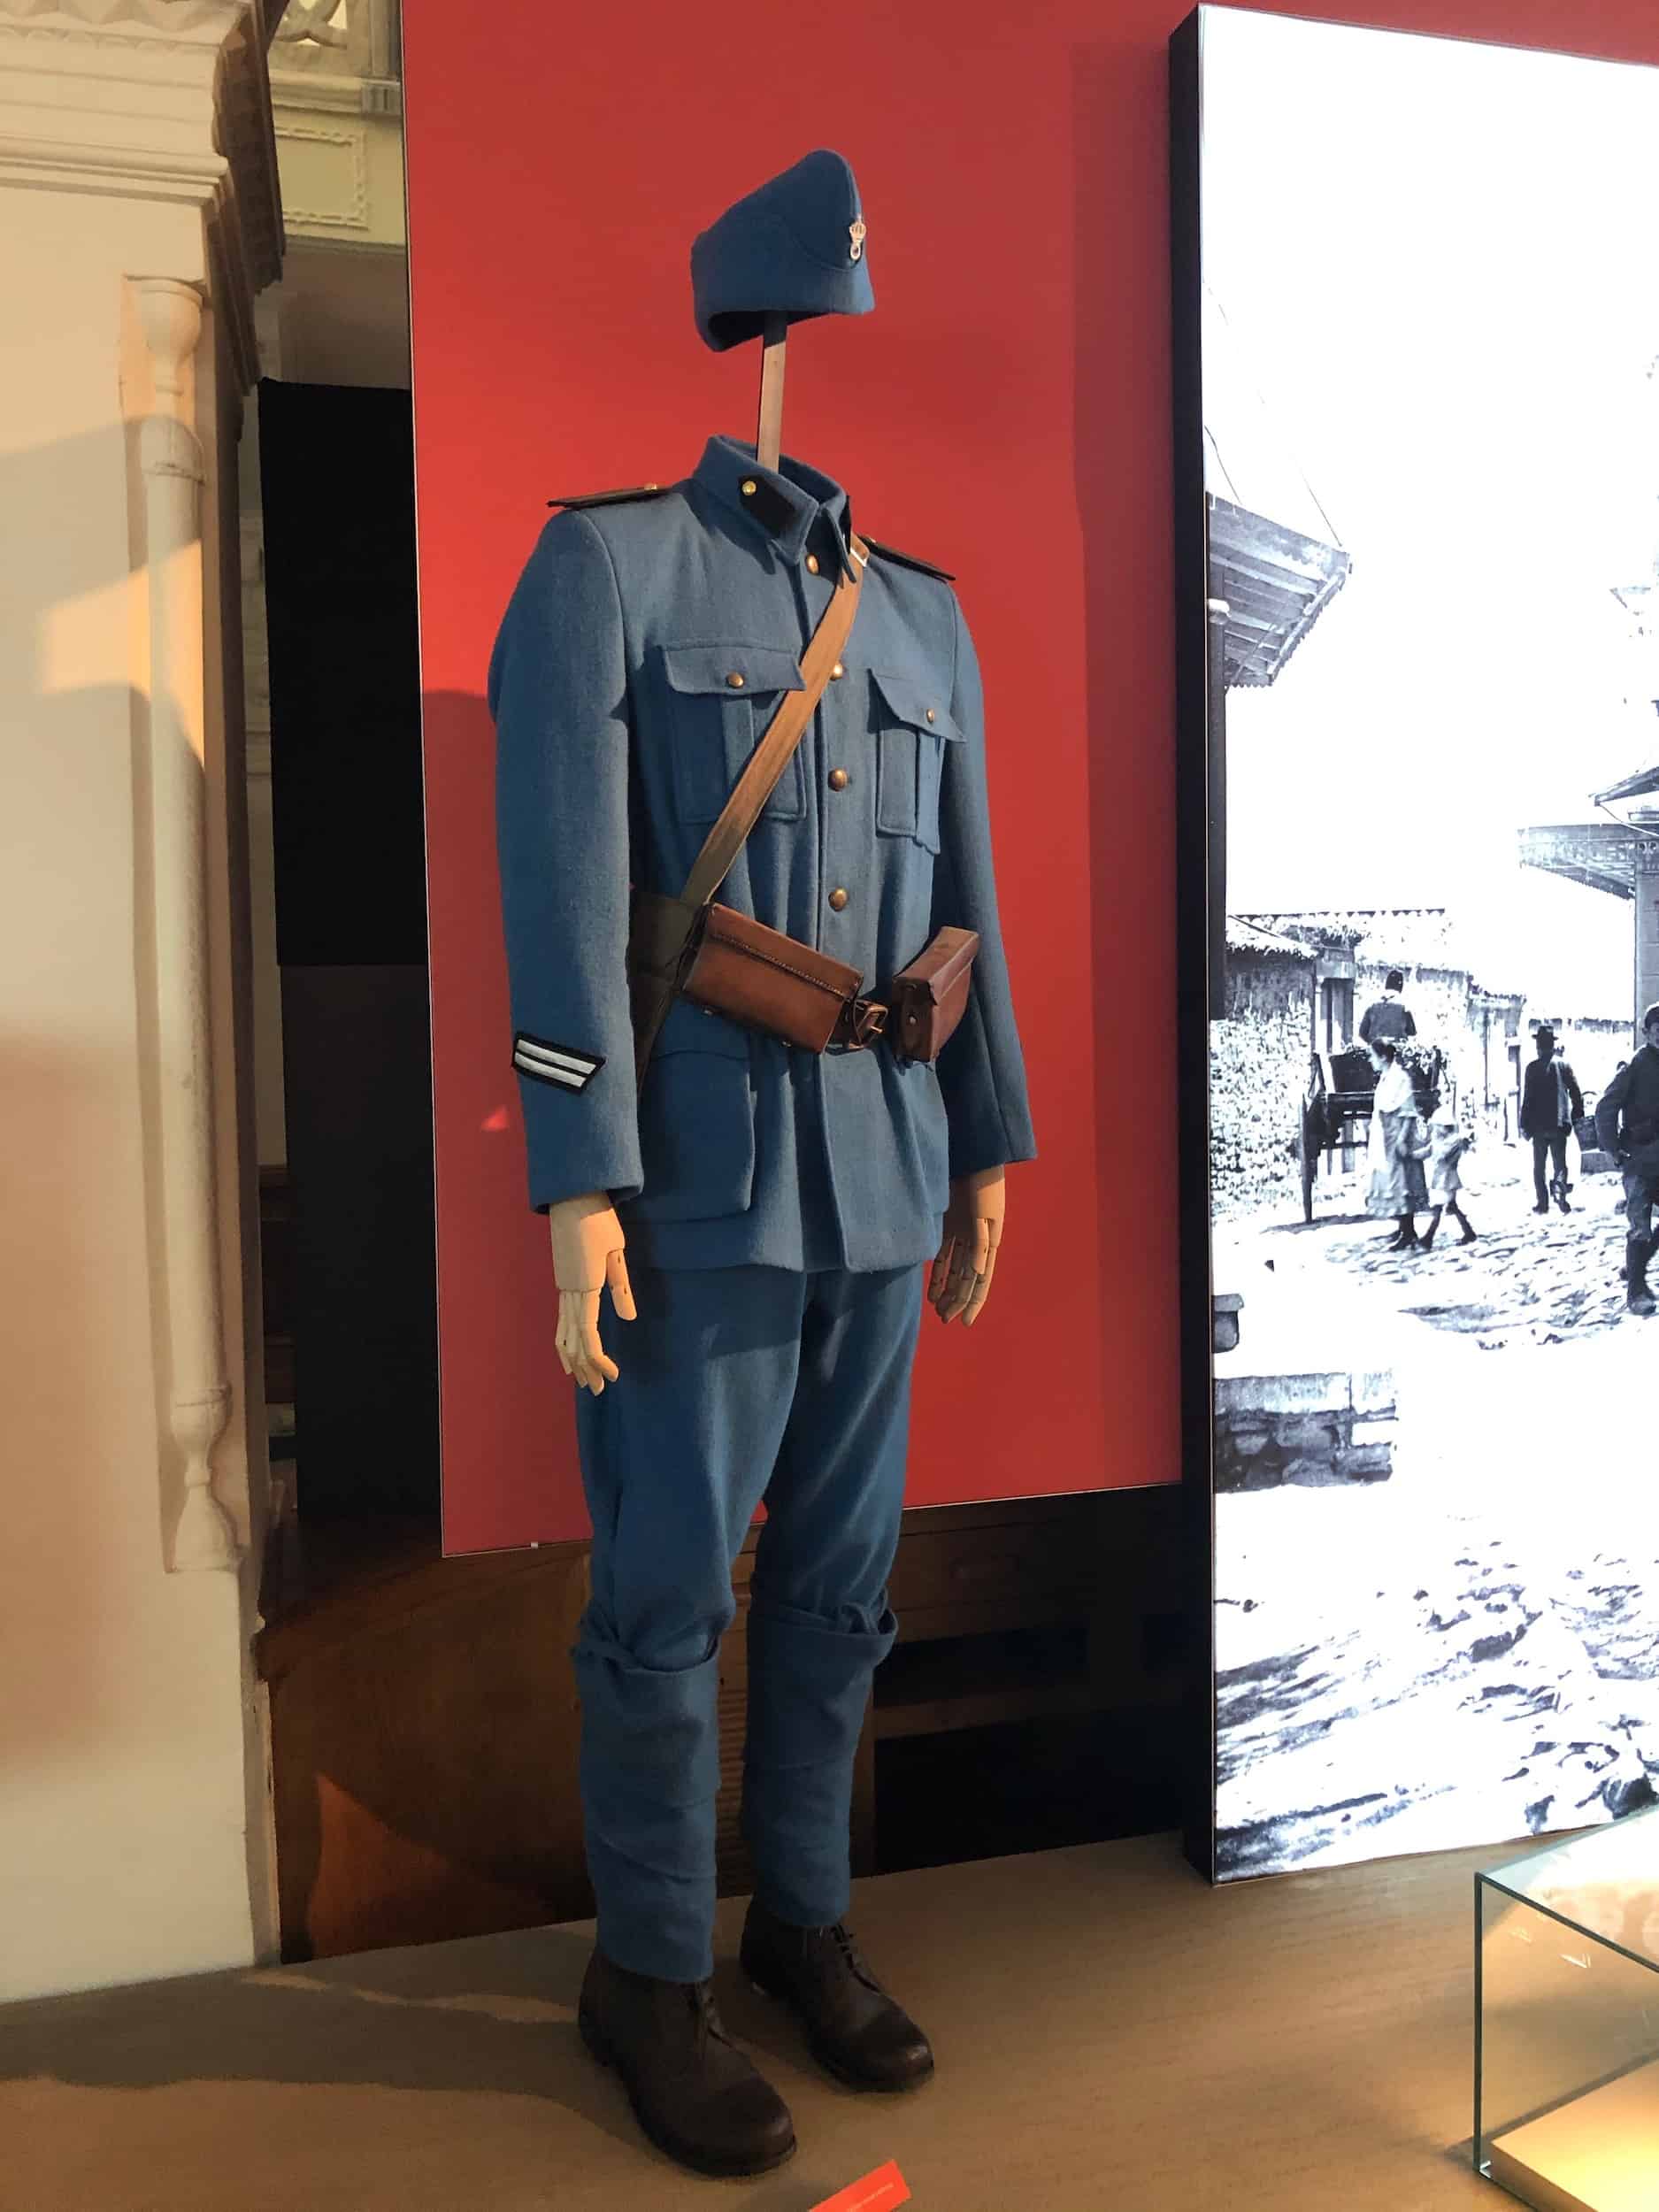 Greek soldier's uniform at the İşbank Museum in Eminönü, Istanbul, Turkey